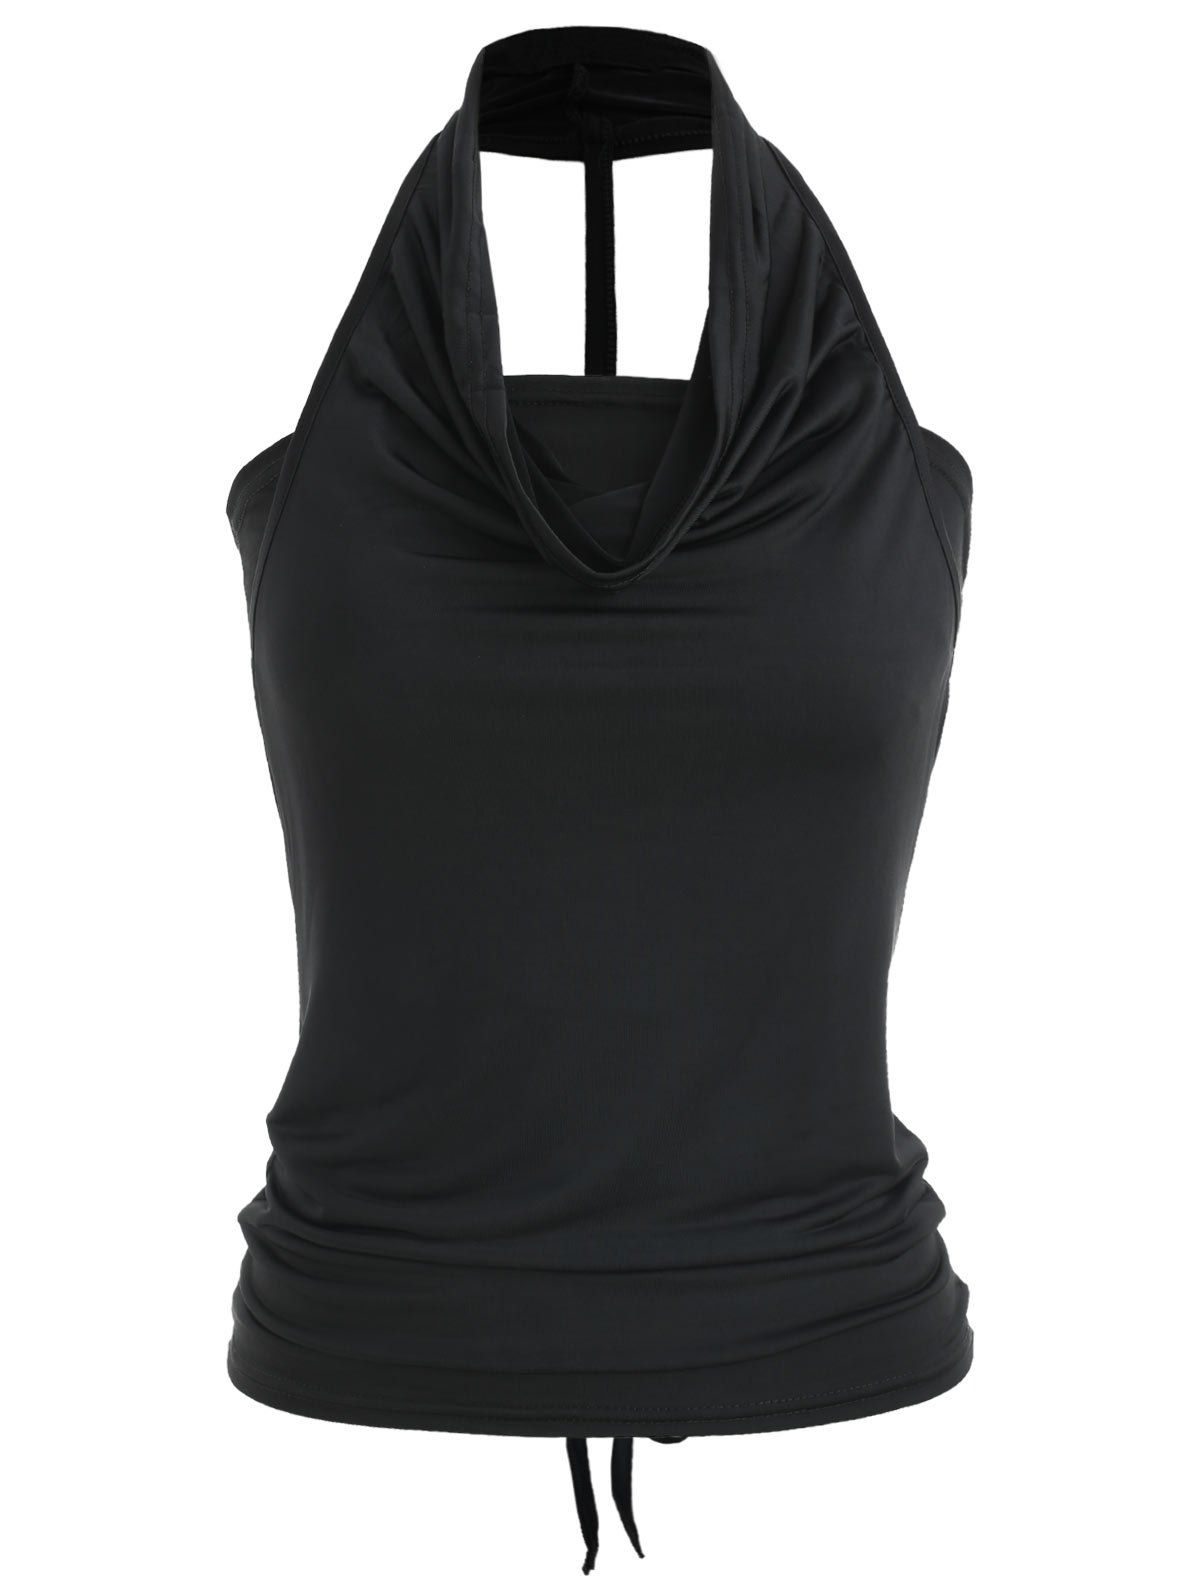 [67% OFF] Cowl Neck Sleeveless Plain Backless T-Shirt | Rosegal